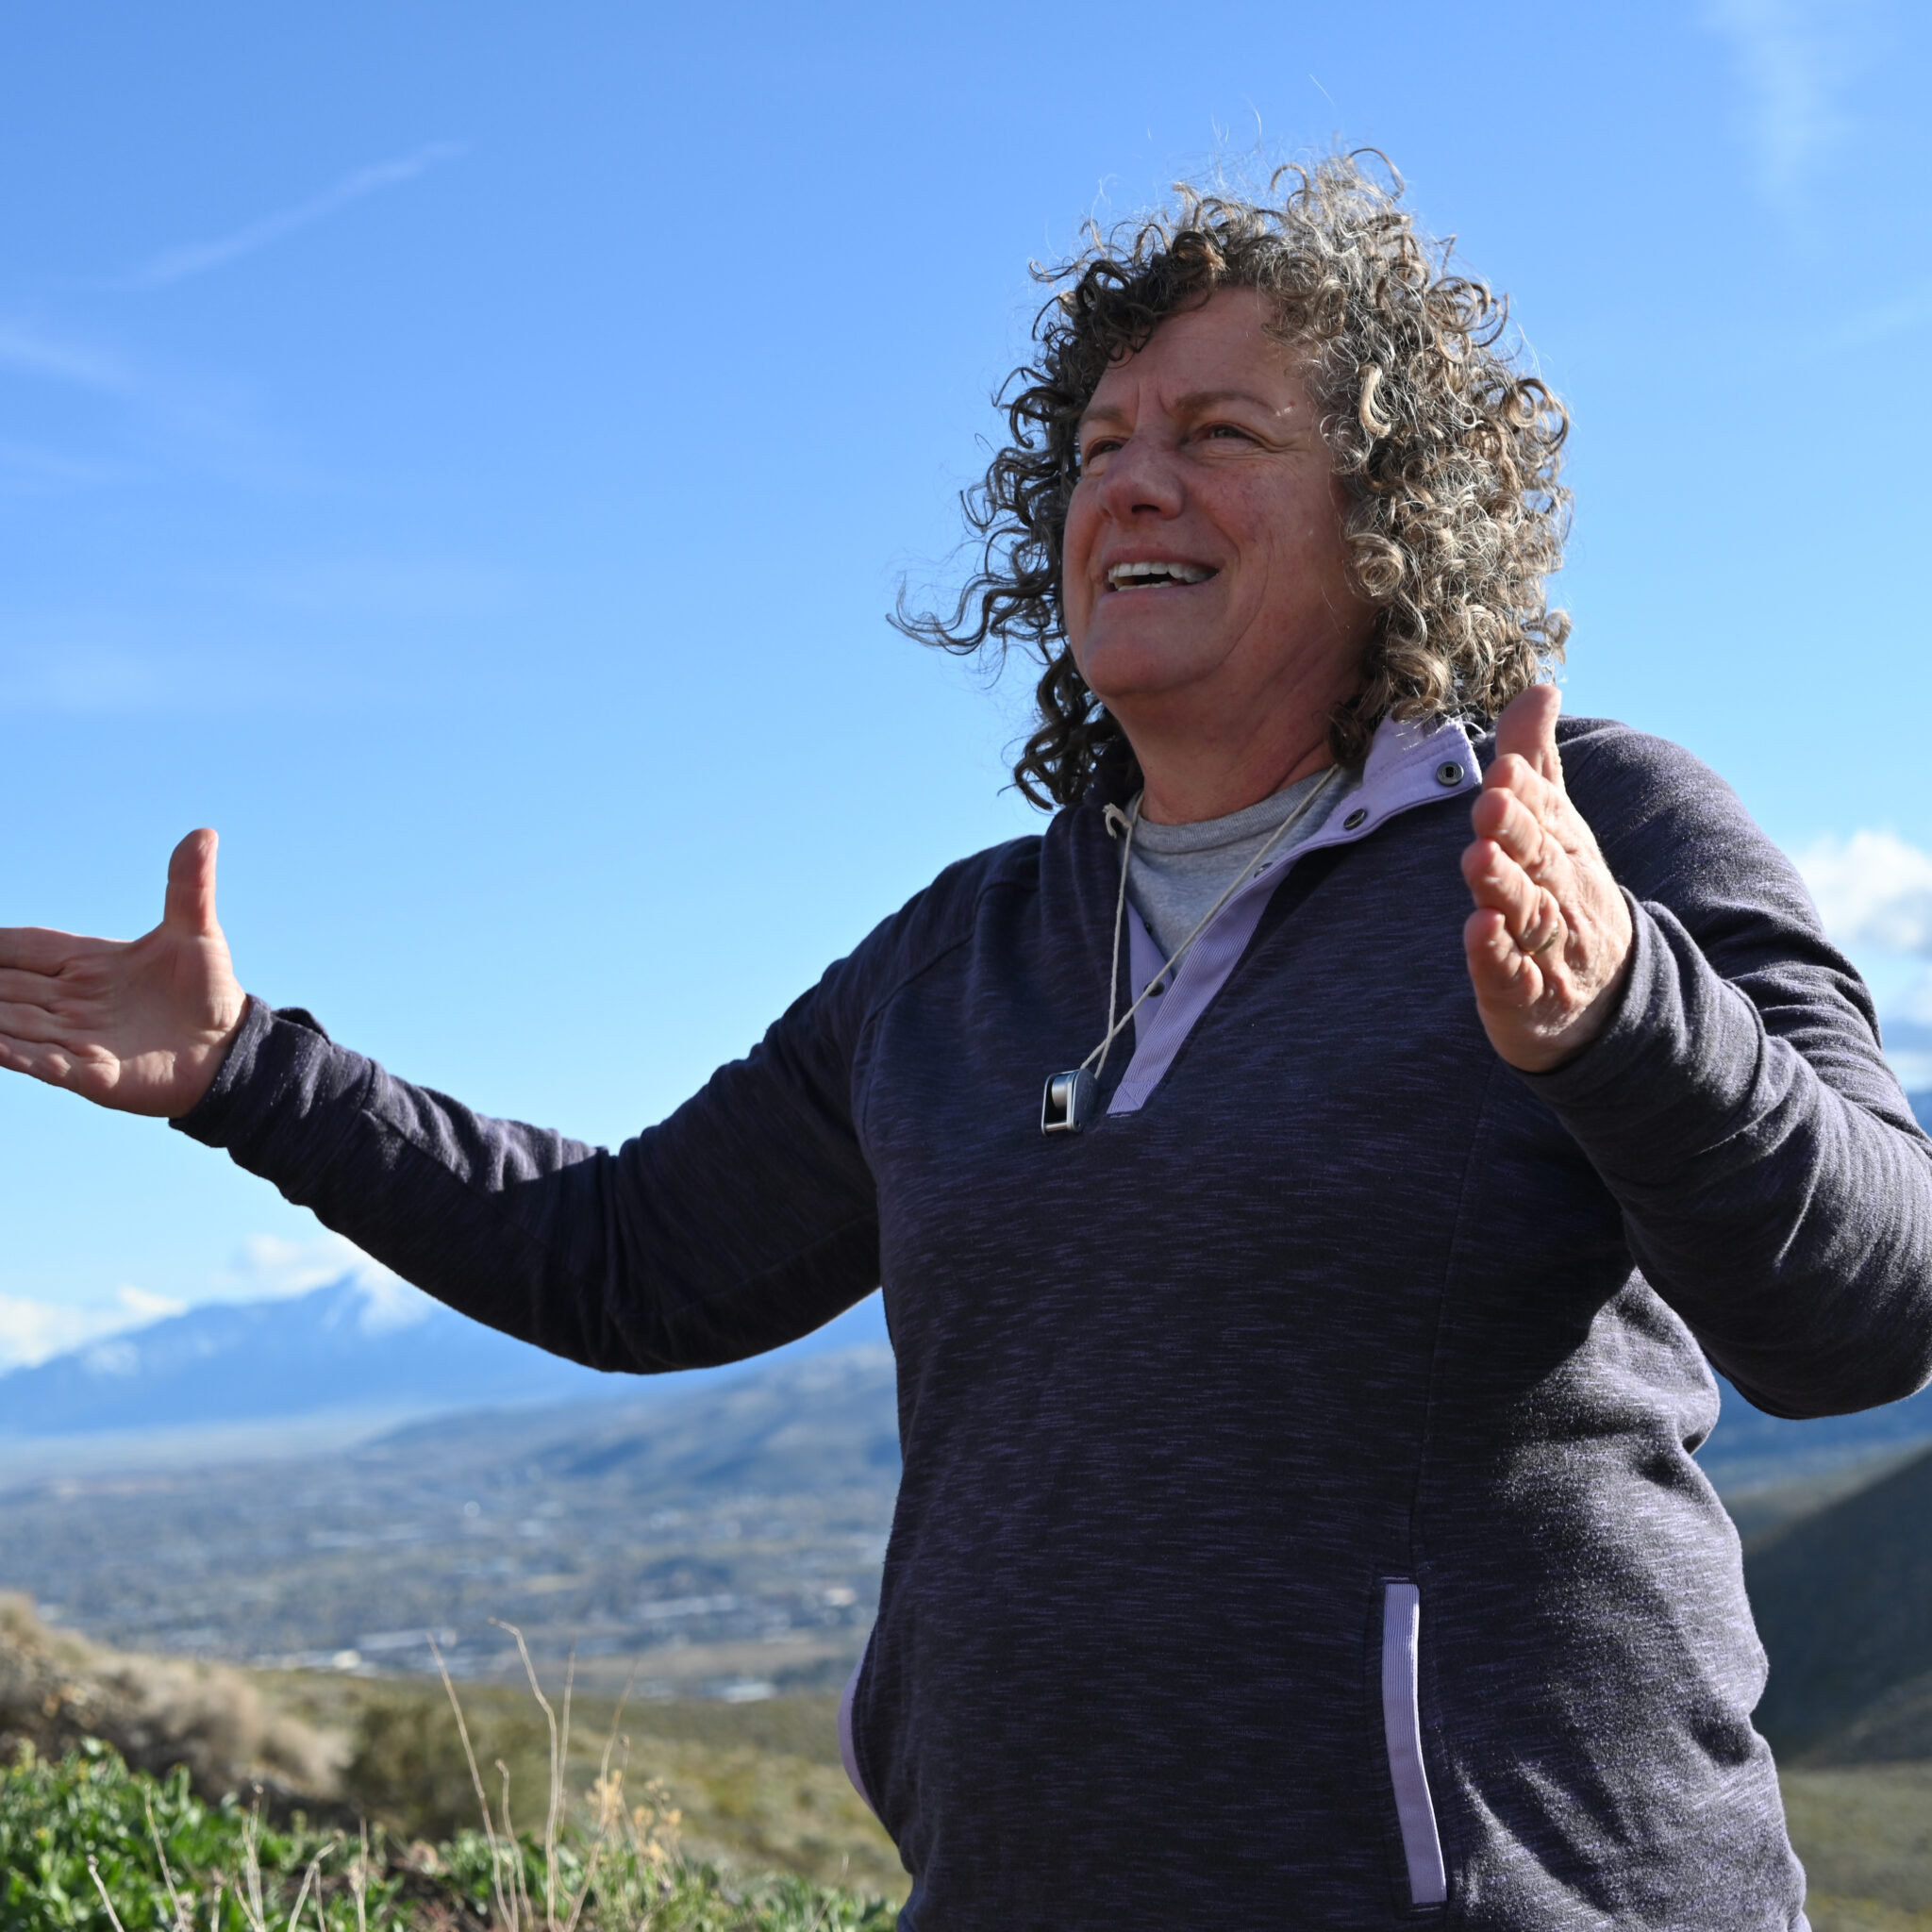 Dr. Kortemeier Leads Tour to Carson City Volcano